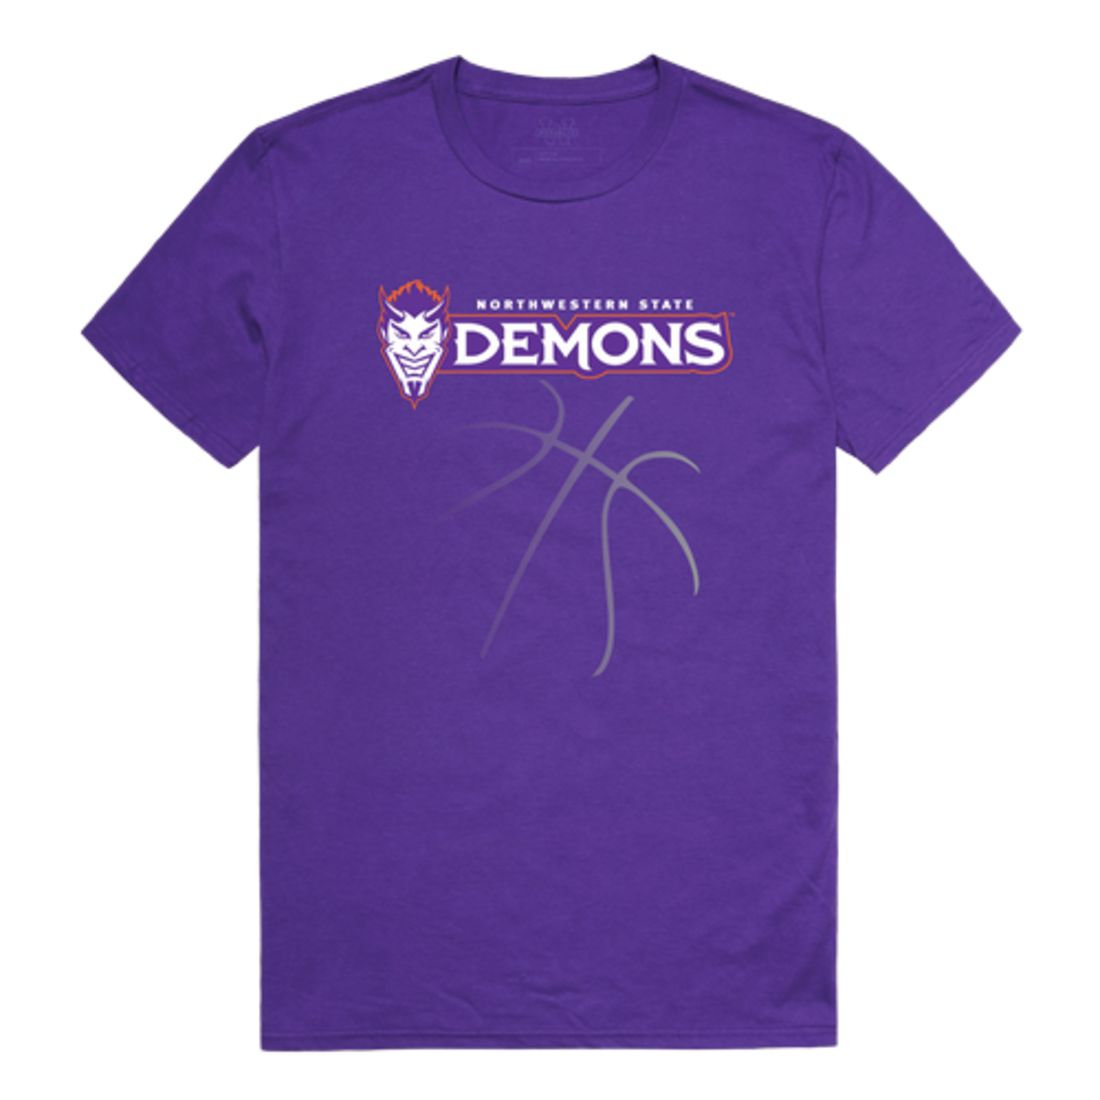 Northwestern State University Demons Basketball T-Shirt